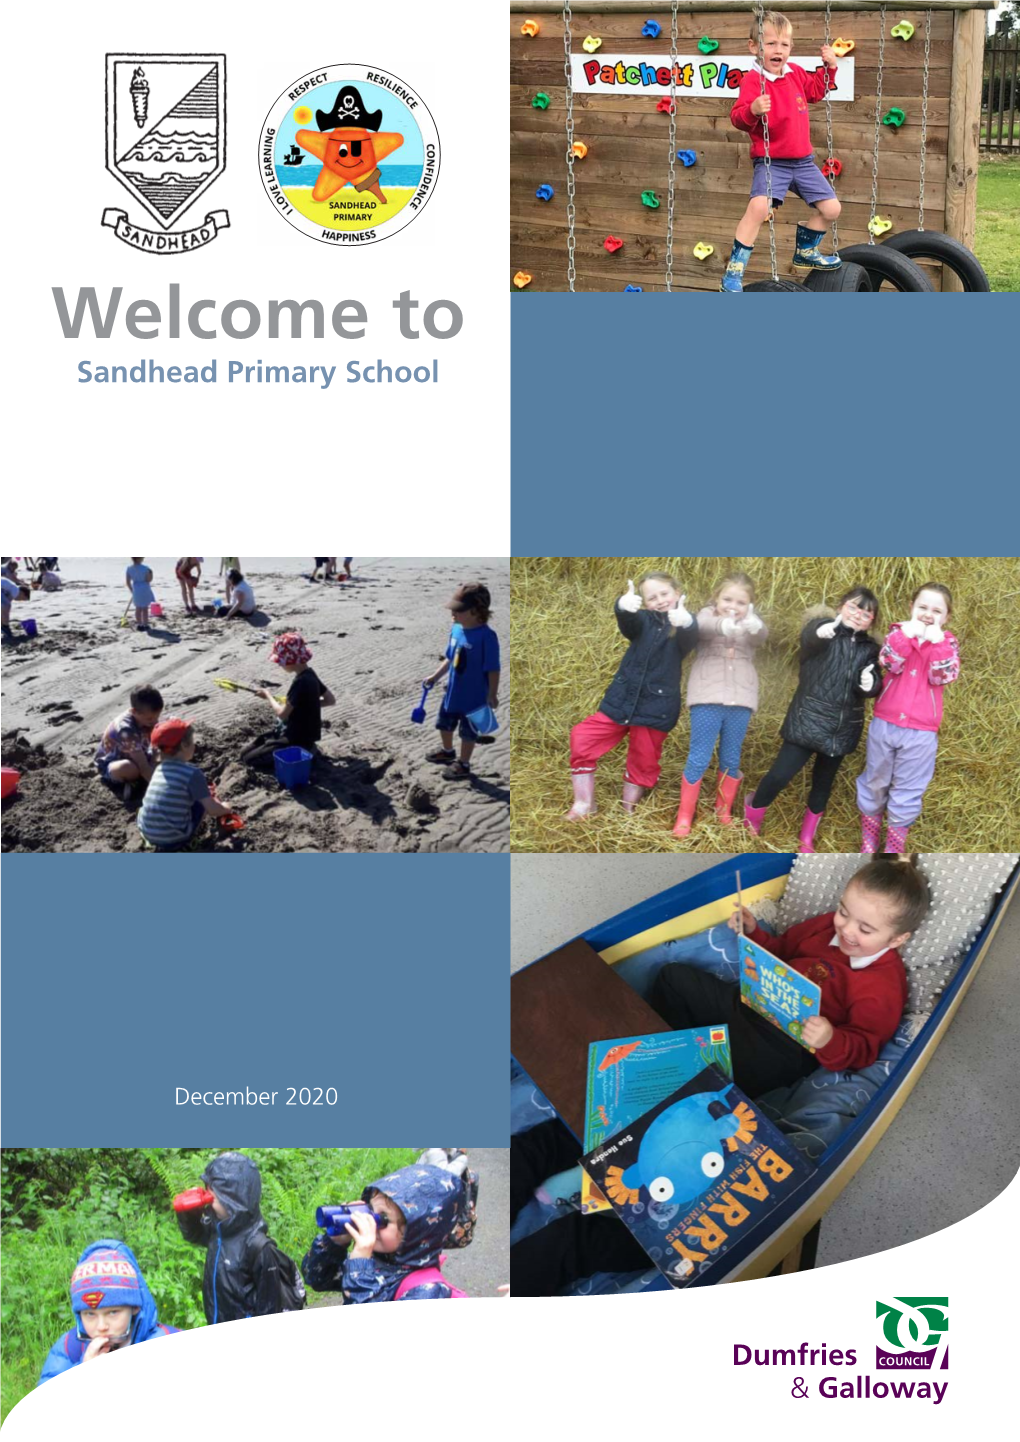 Sandhead Primary School